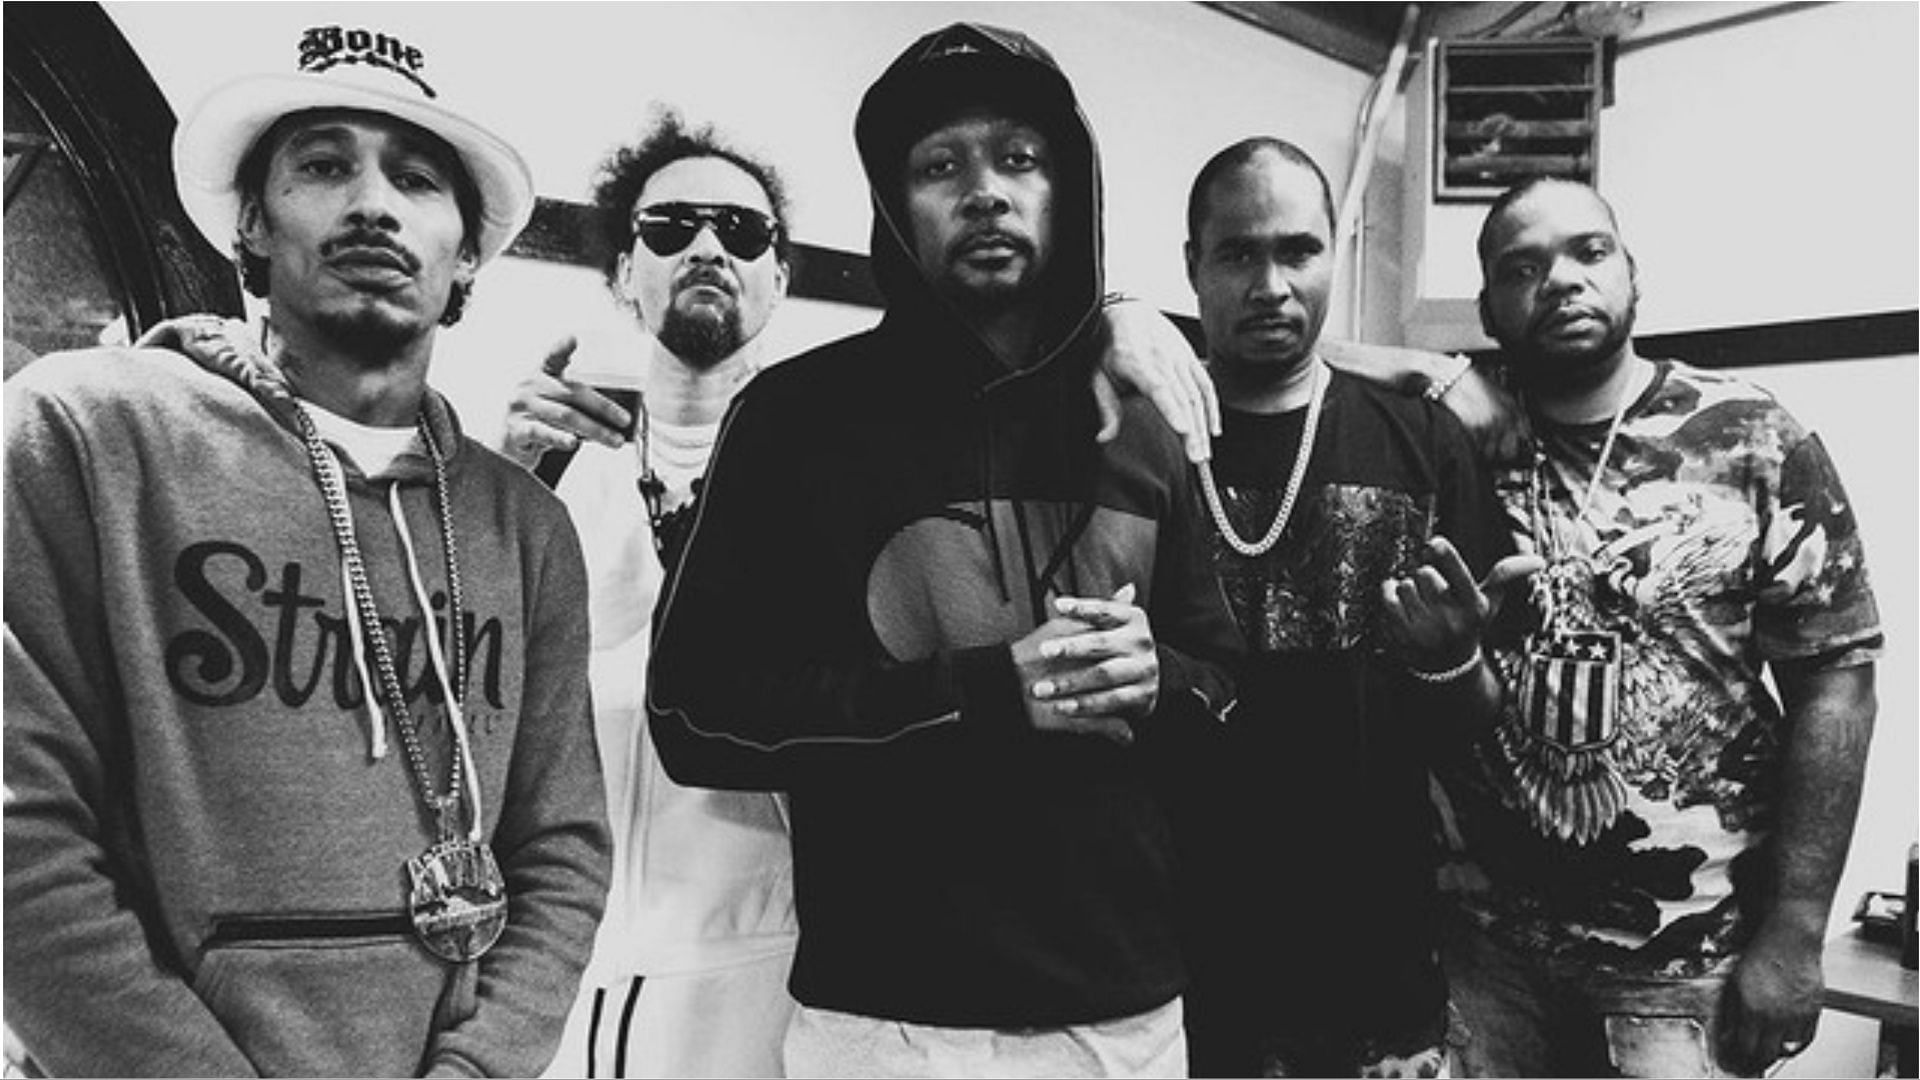 Bone Thugs-n-Harmony has a total of five members (Image via MindOfTheMadman/X)